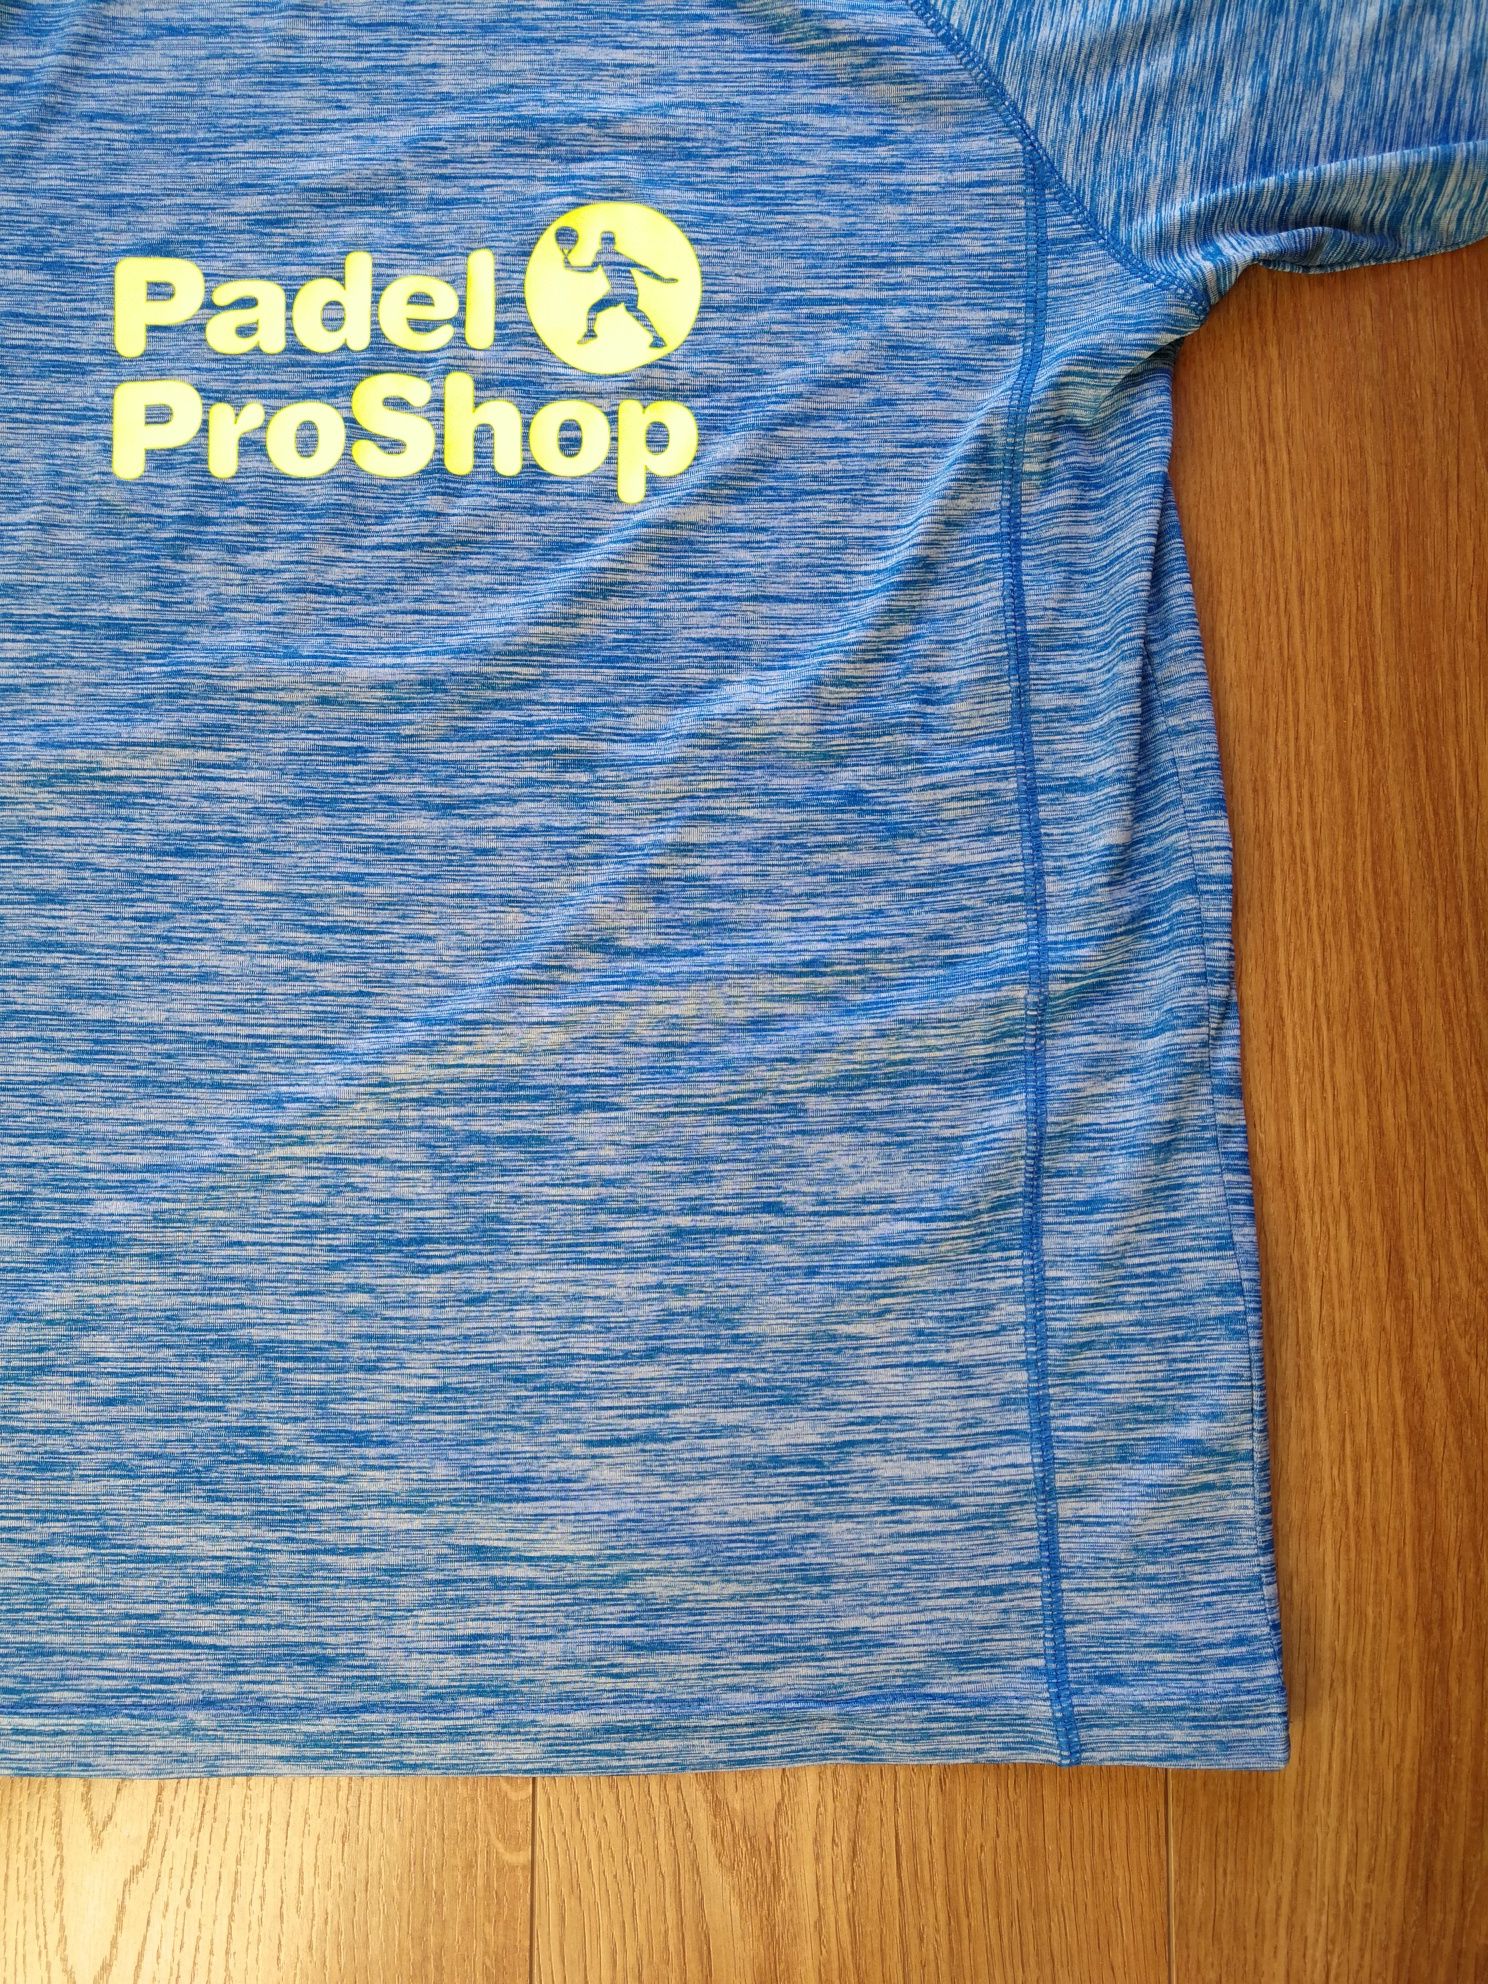 T-Shirt Padel Pro